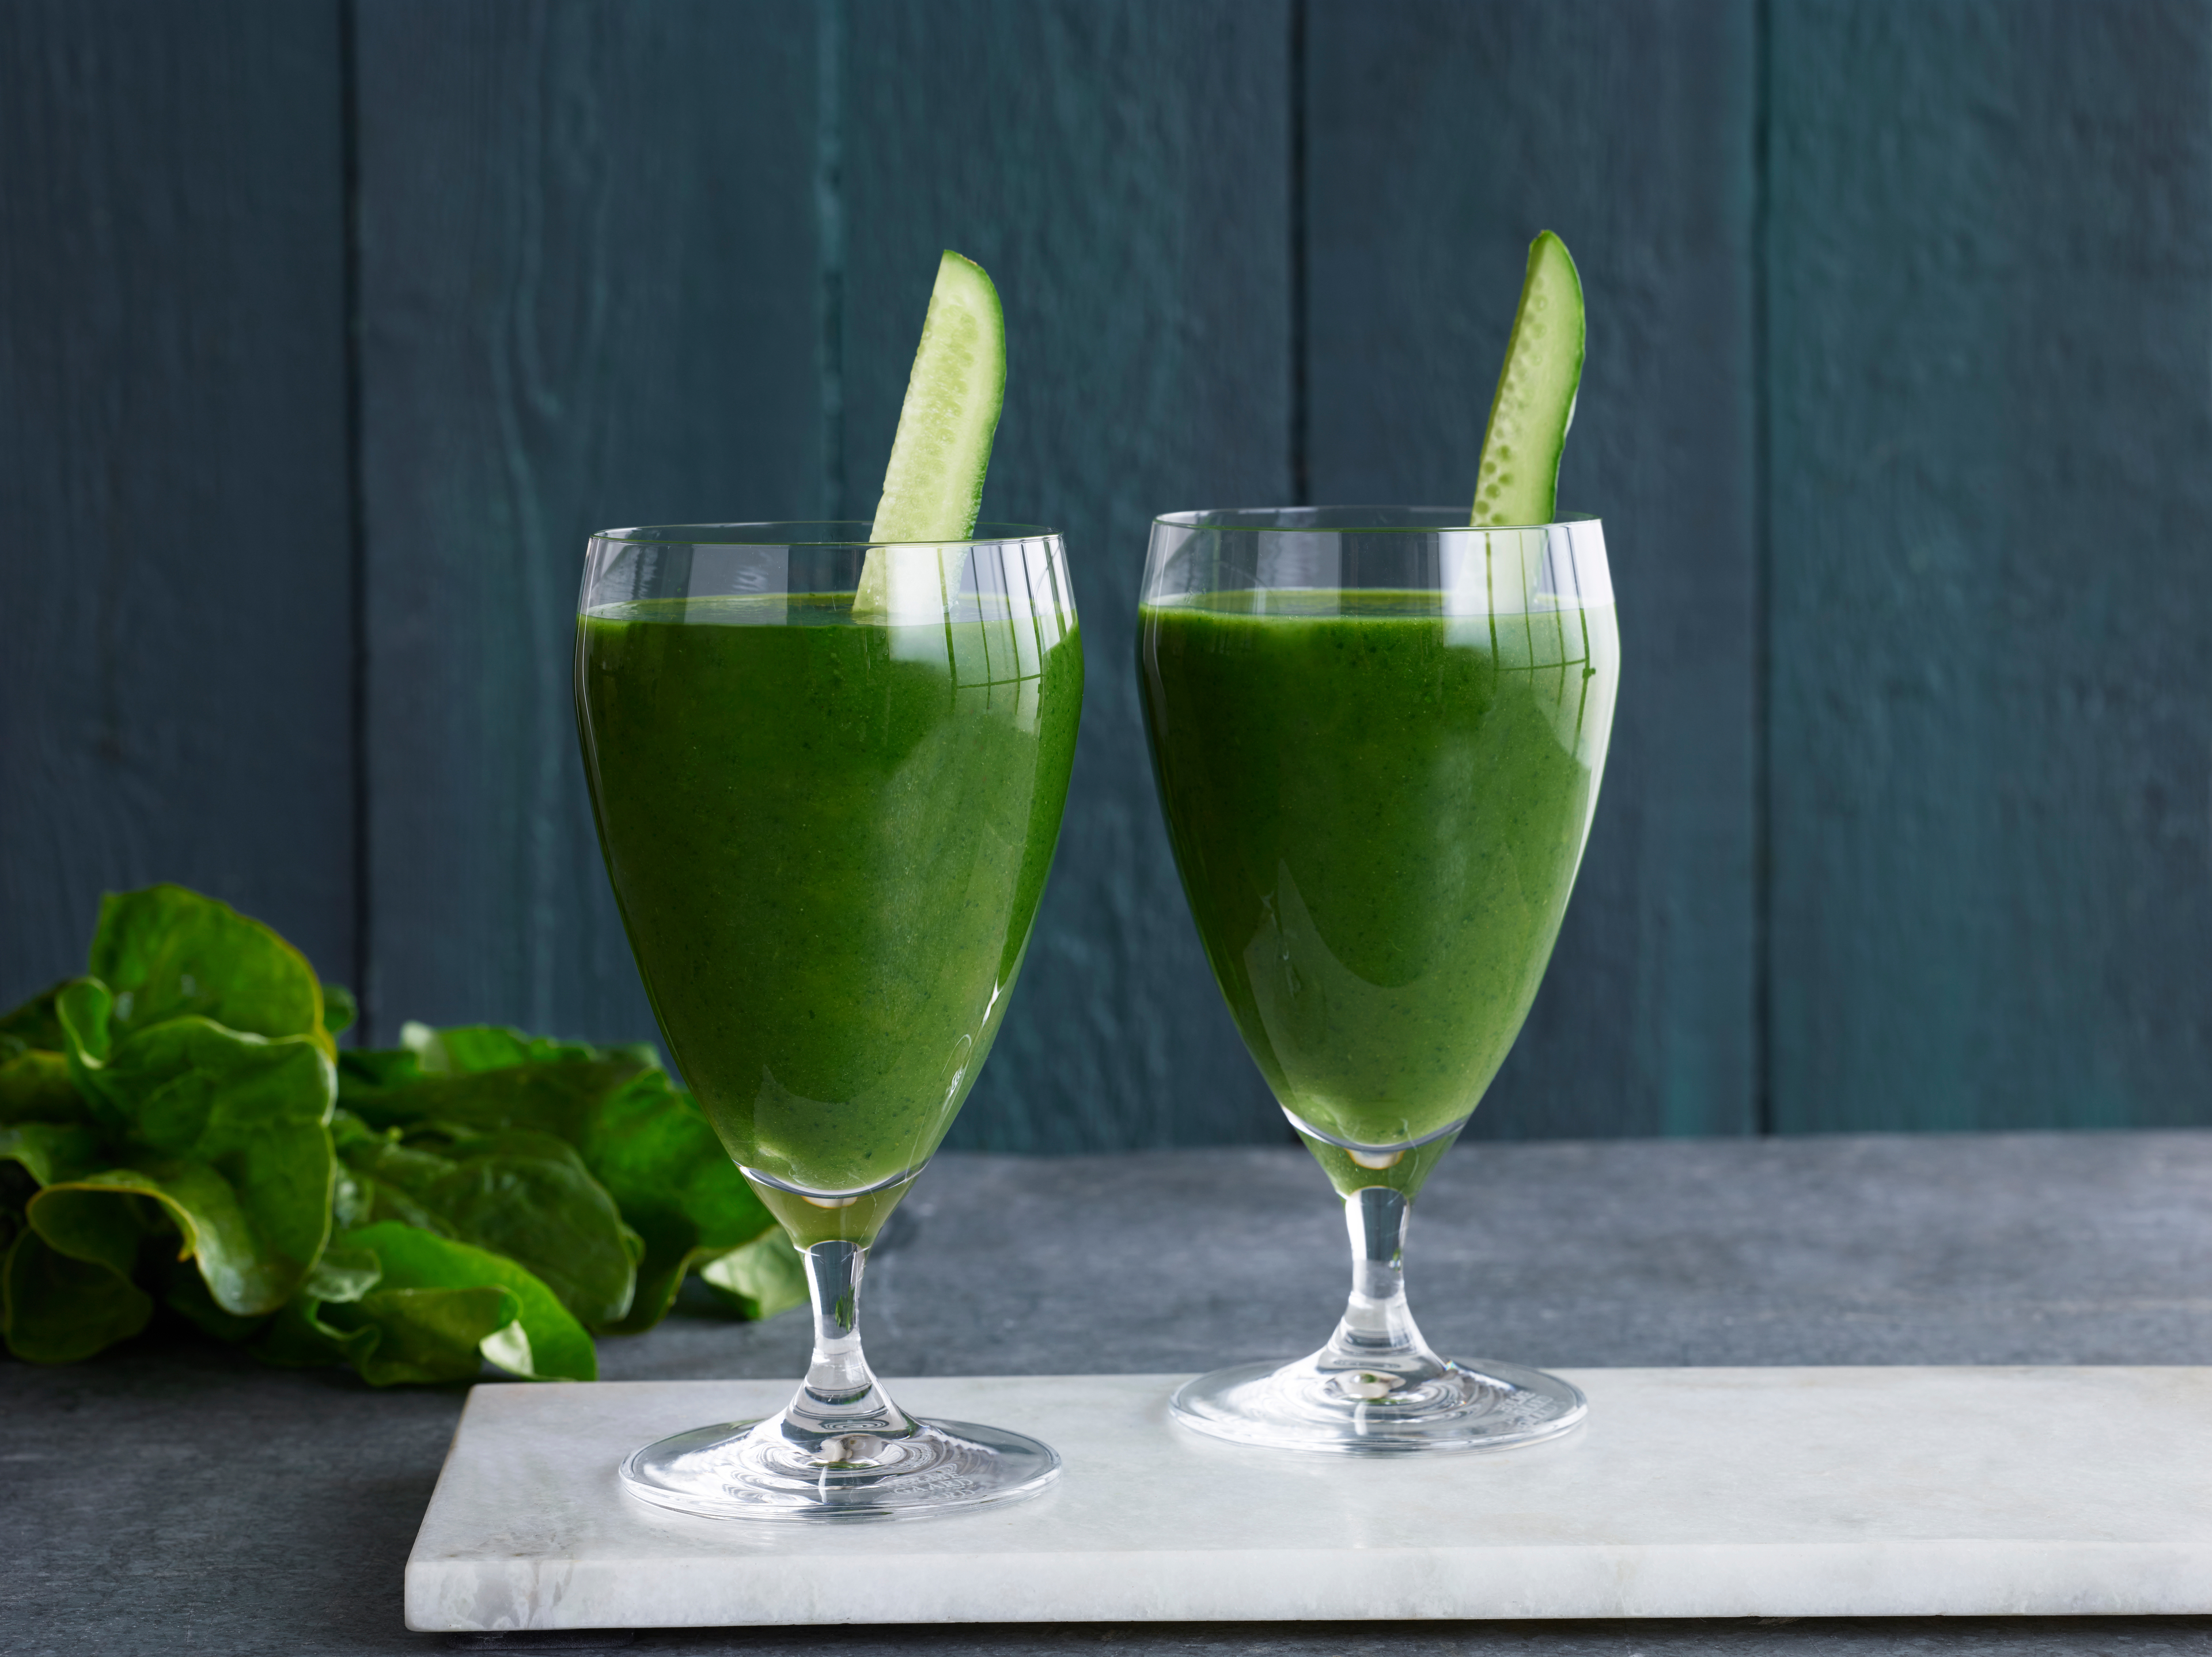 Ølglass fra Holmegaard med grønn drikke